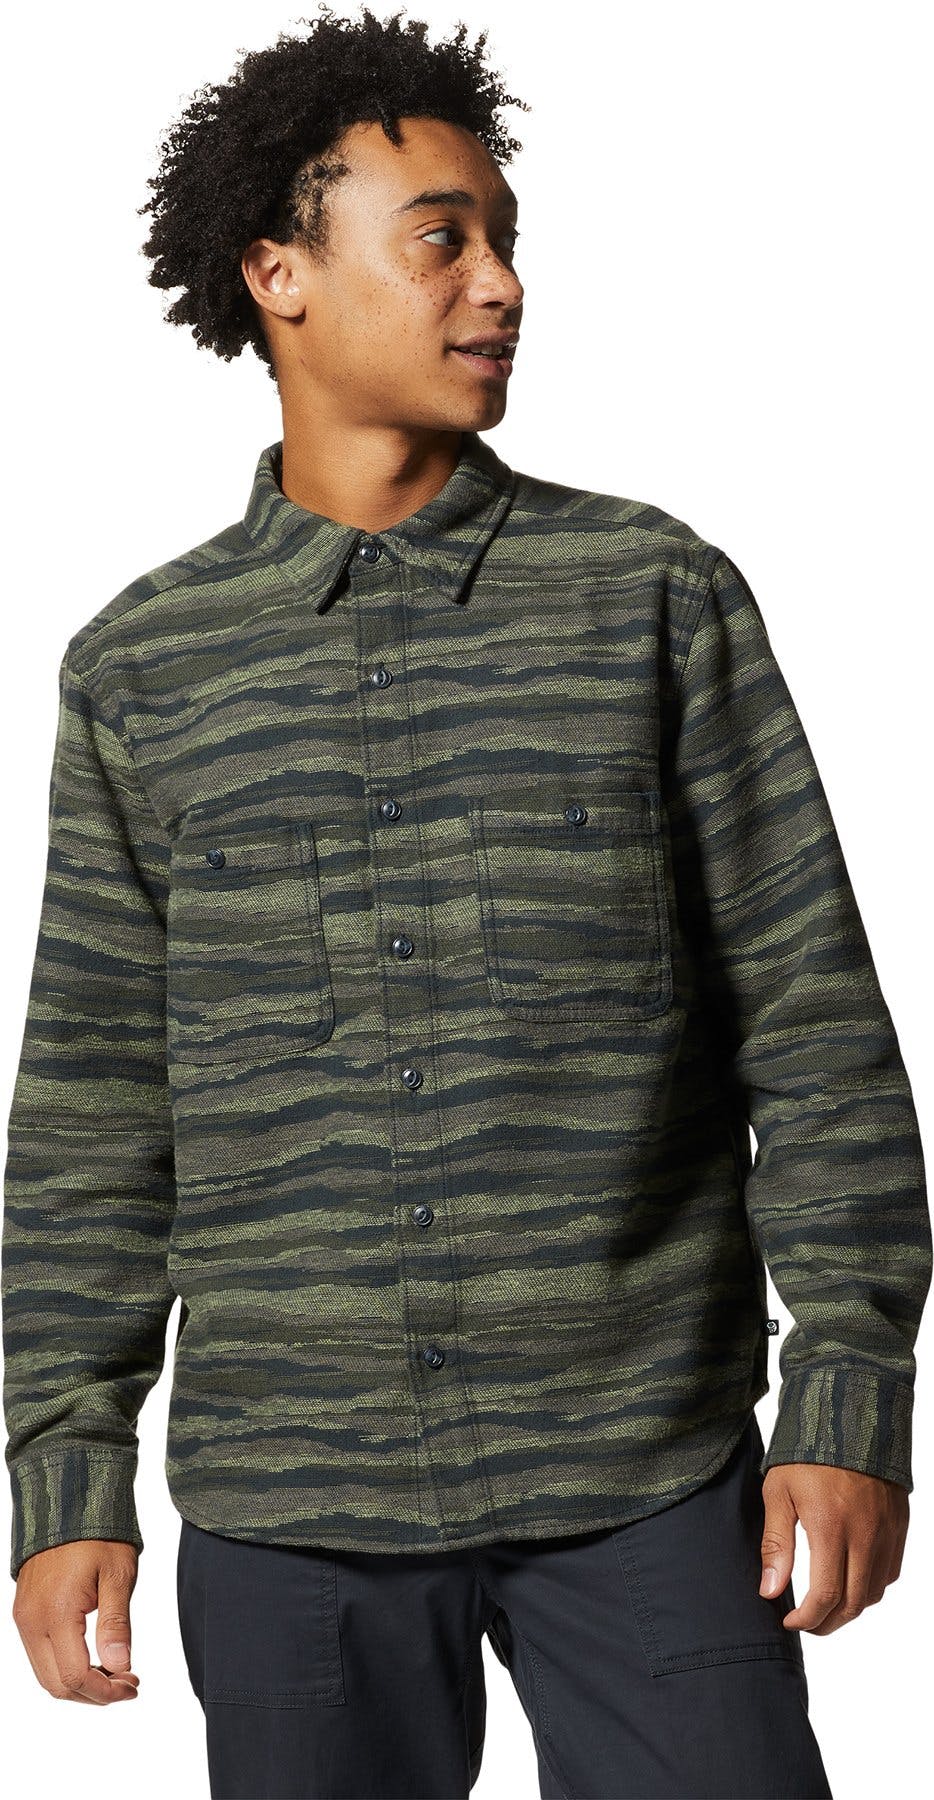 Product image for Granite Peak Long Sleeve Flannel Shirt - Men's